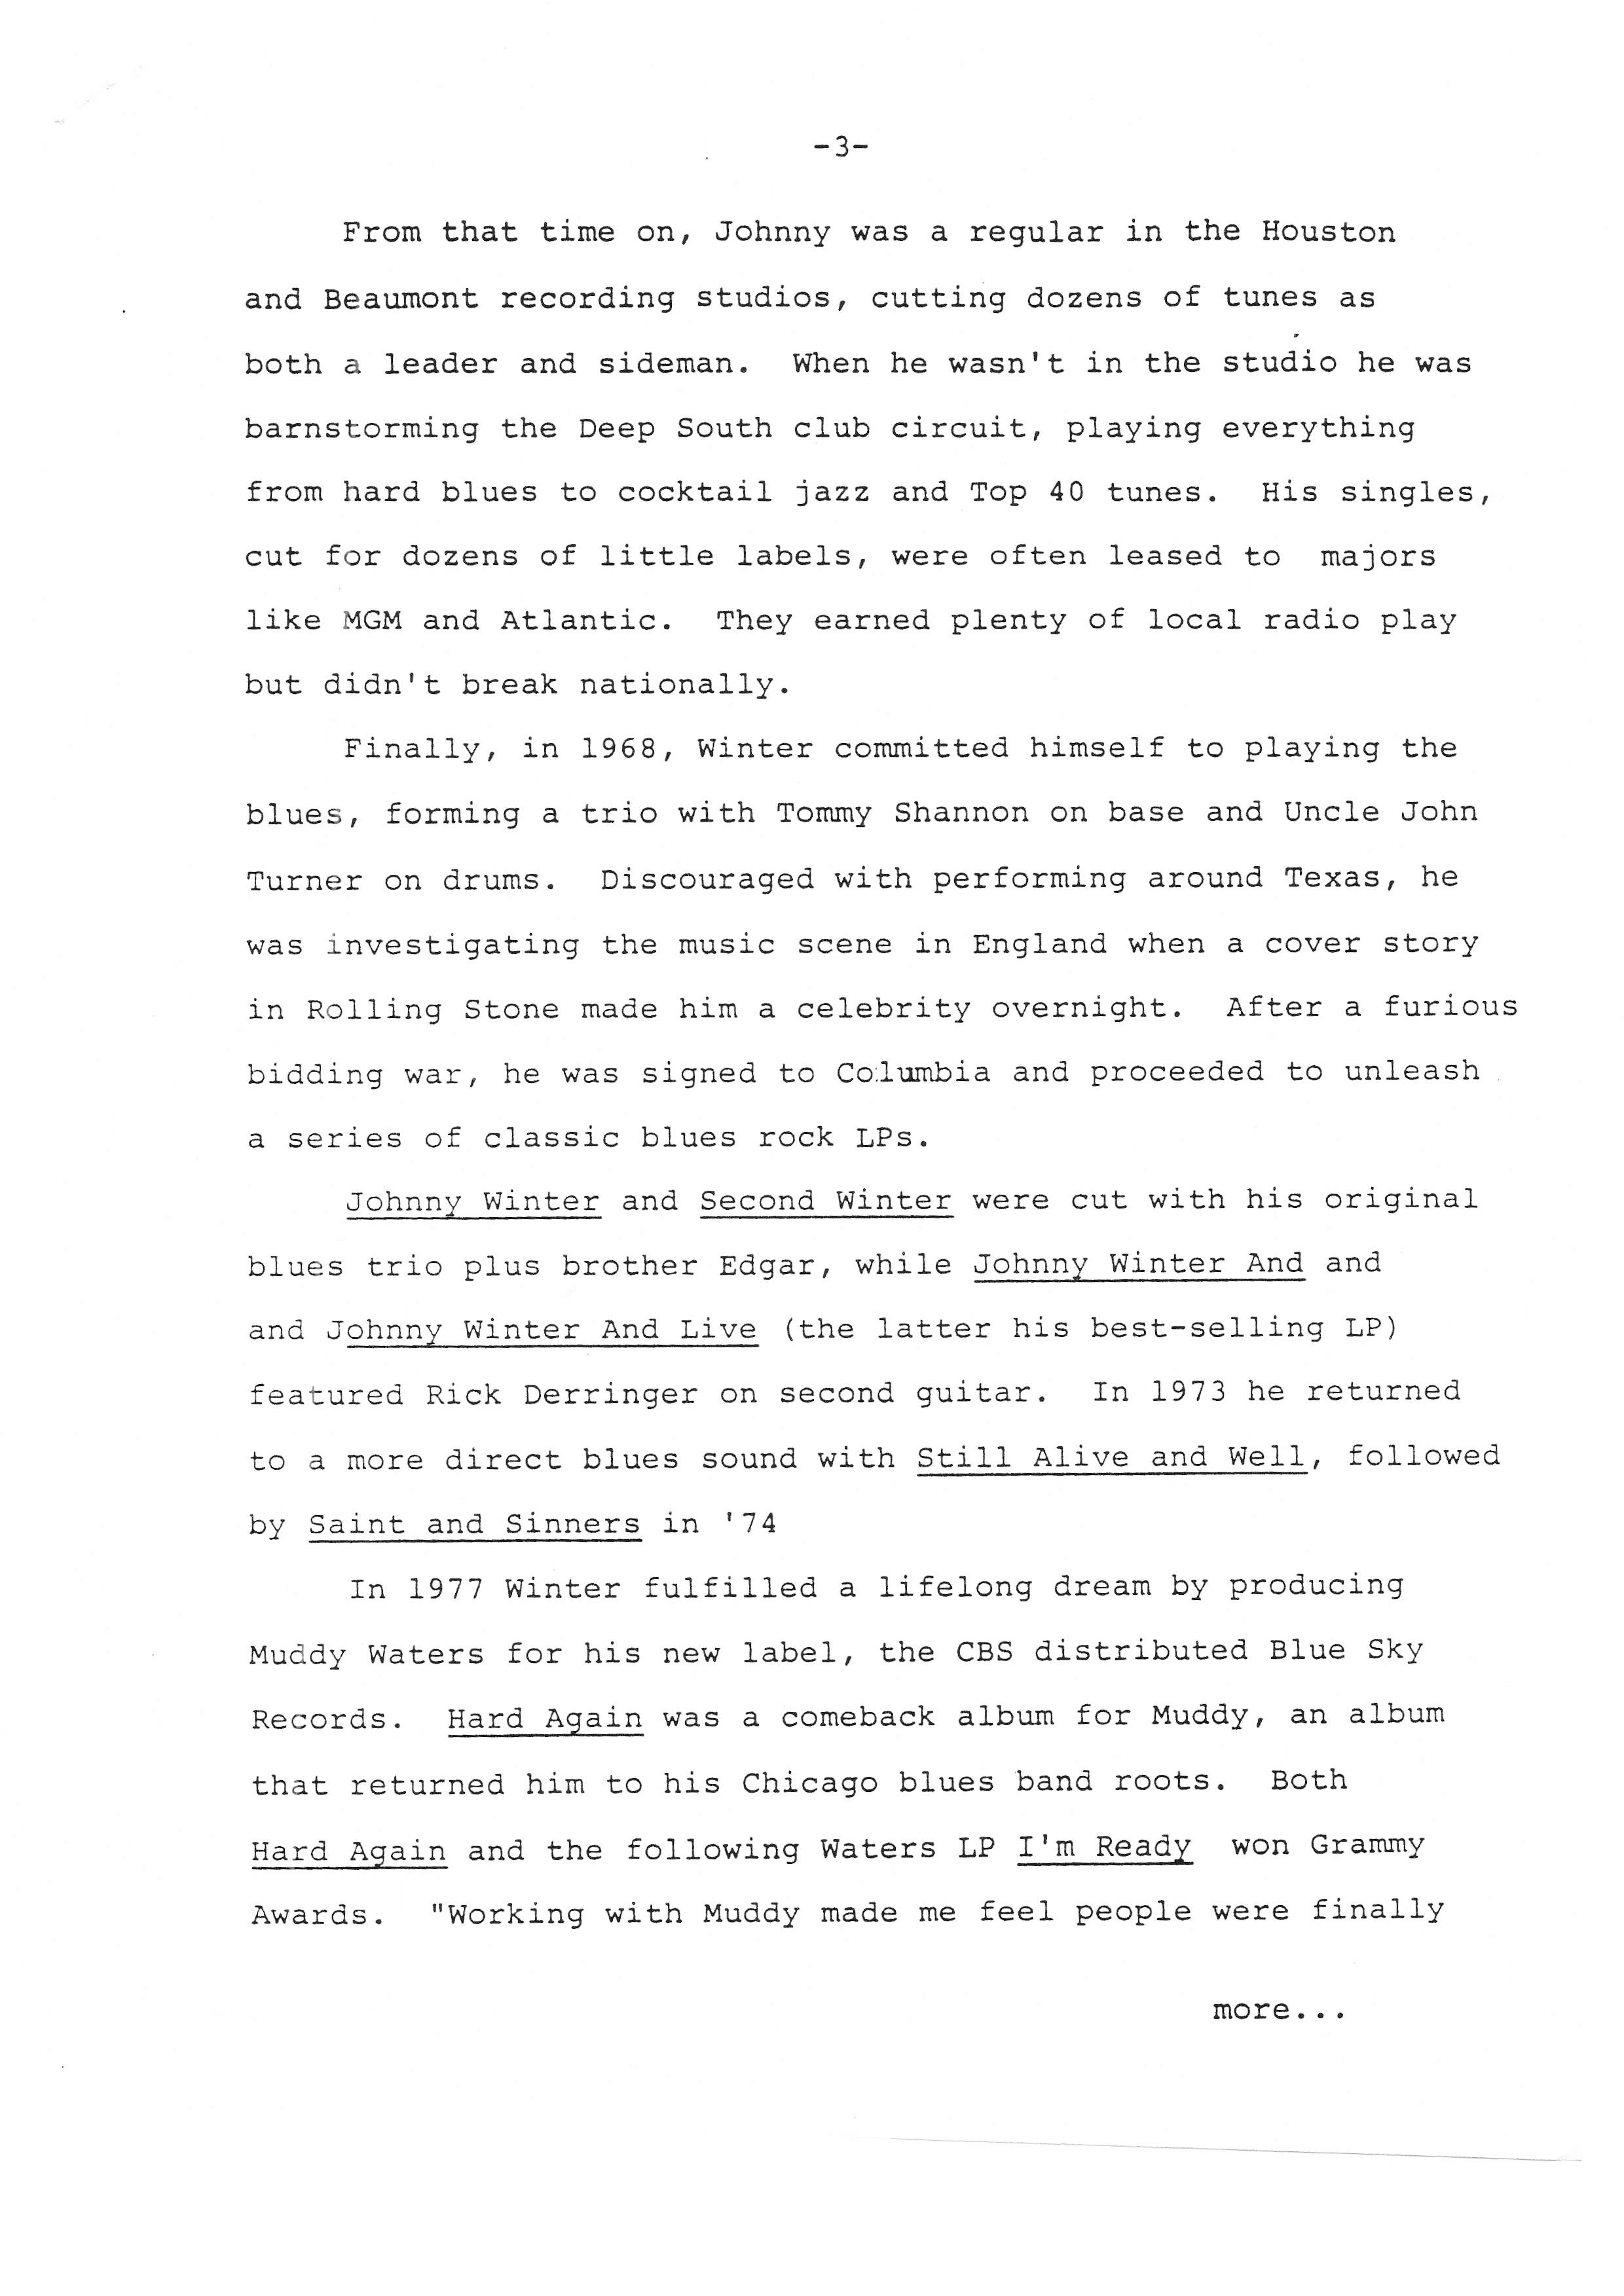 Press release of "Winter of '88" incl Johnny Winter career description, by Slatus Management Part III/V